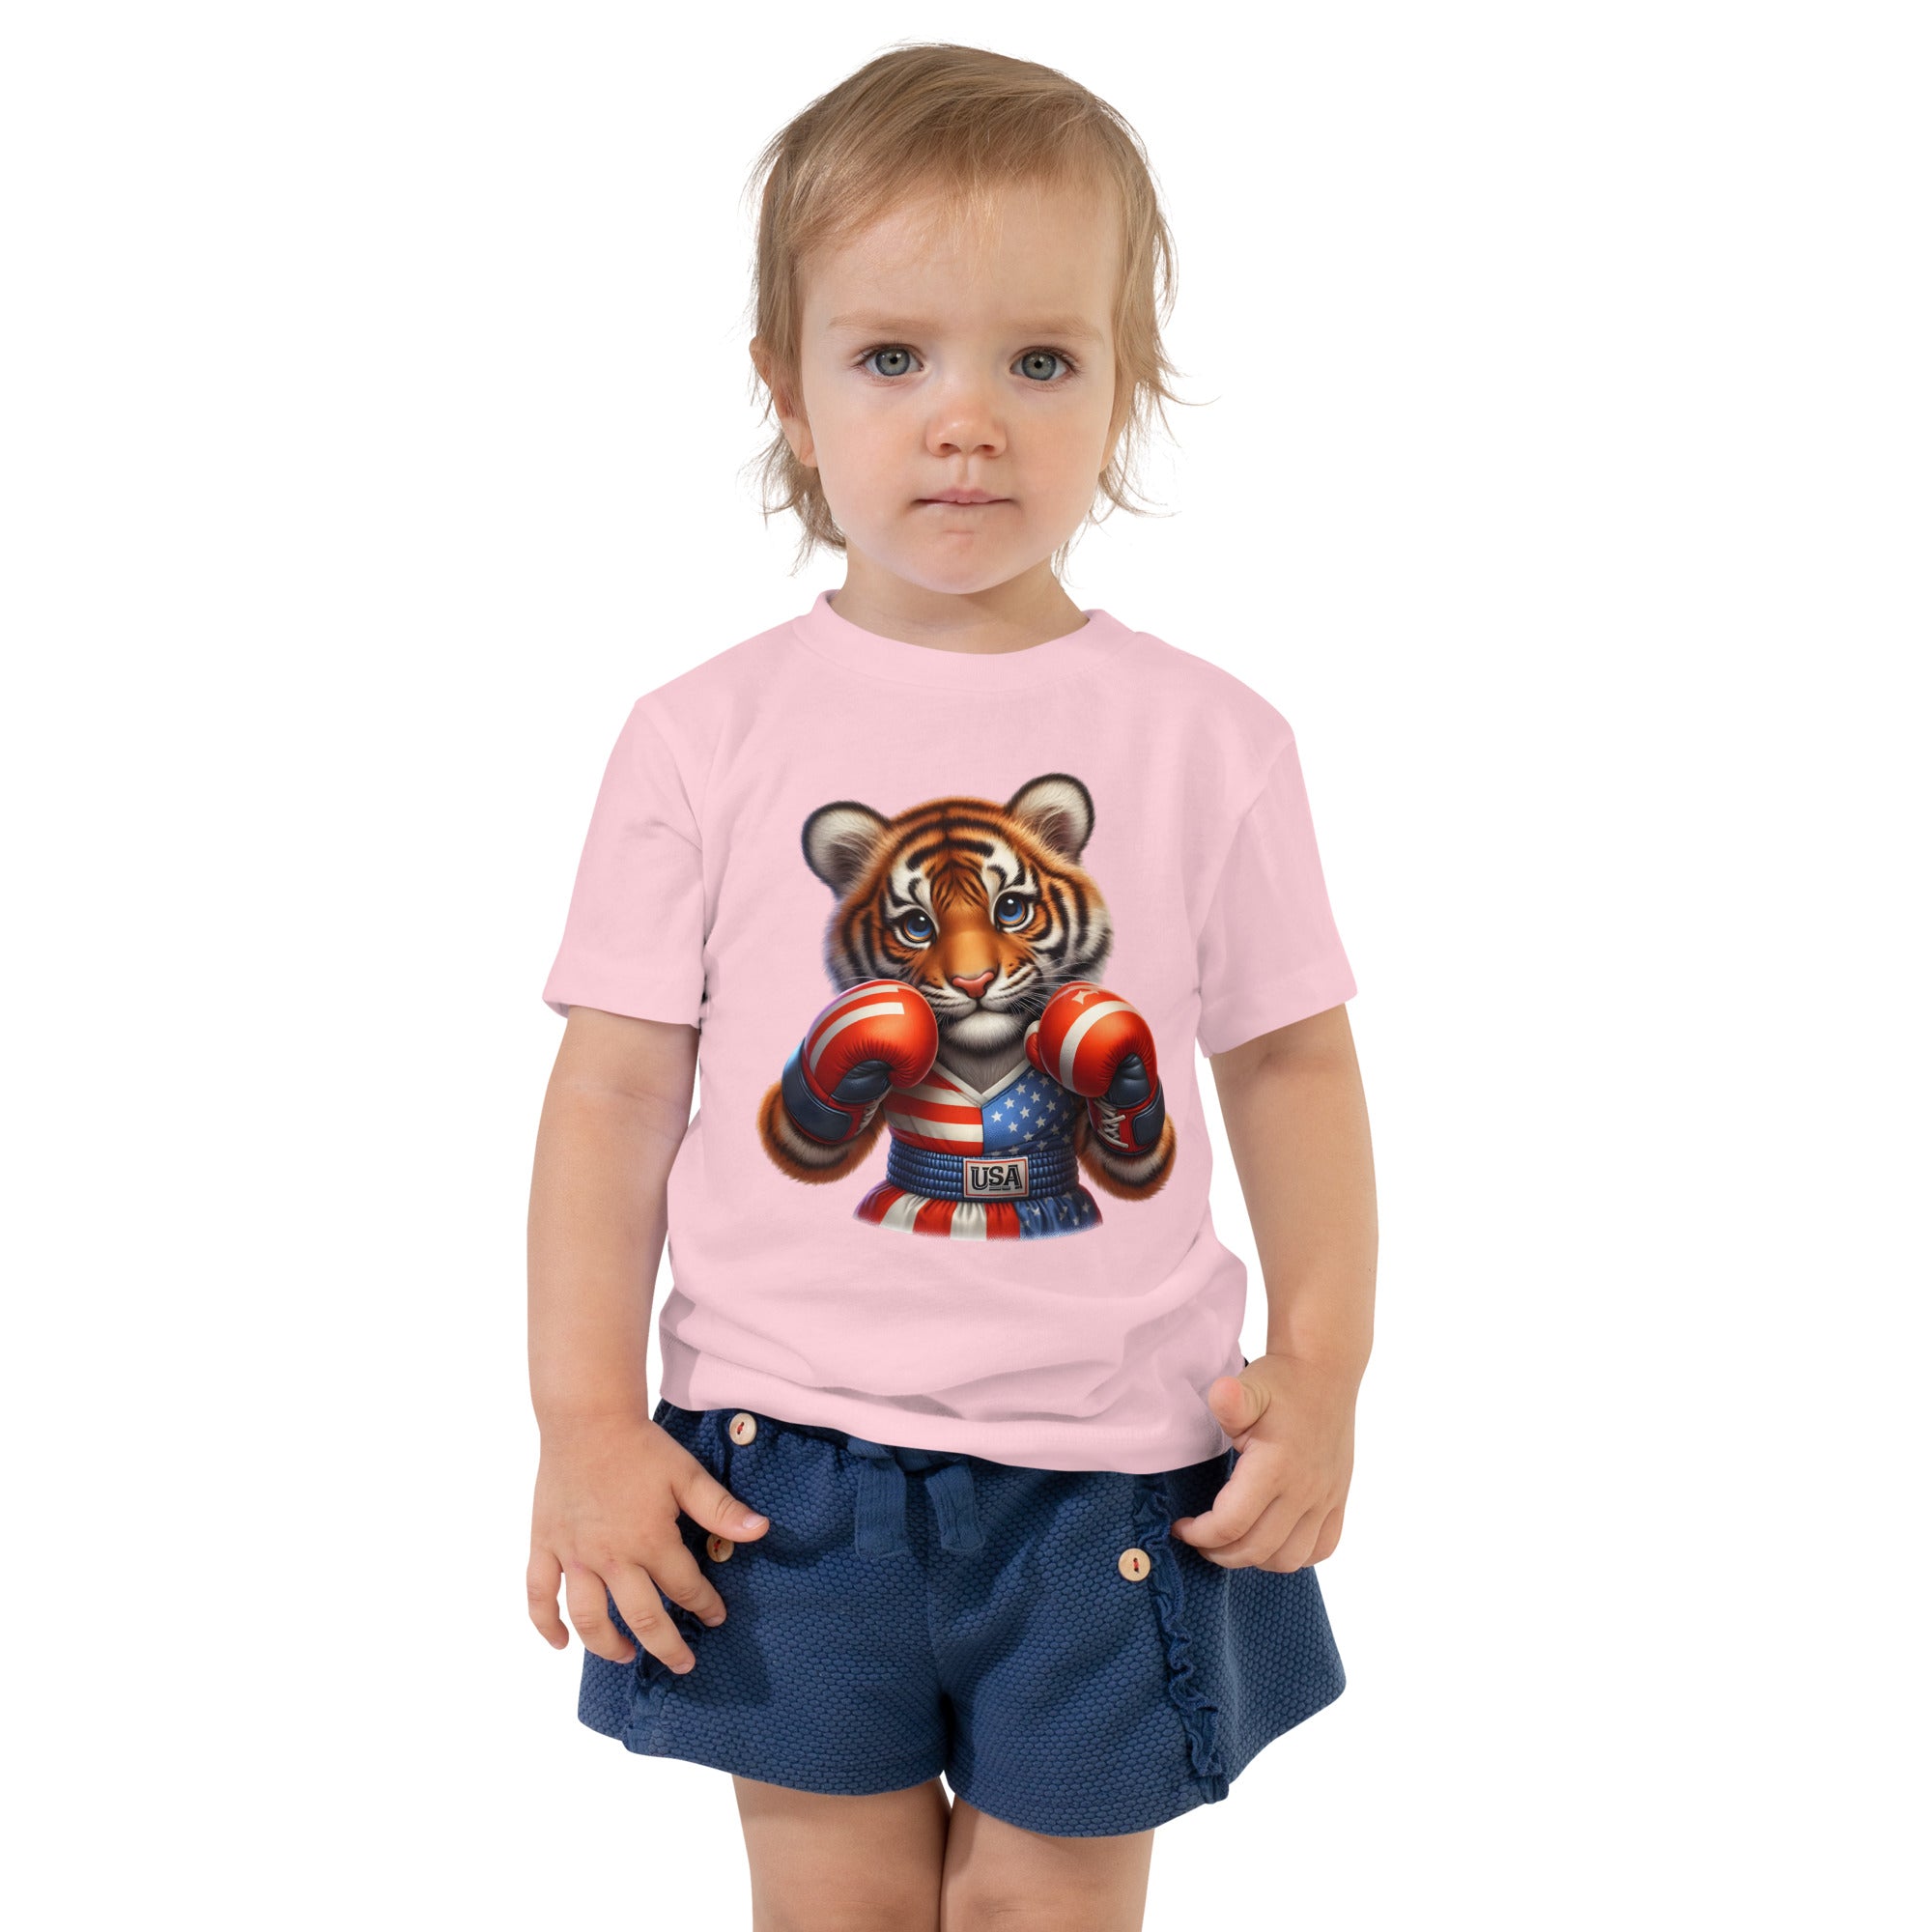 Martial Arts Tiger Cub - Cute Animal Toddler Short Sleeve Design Tee